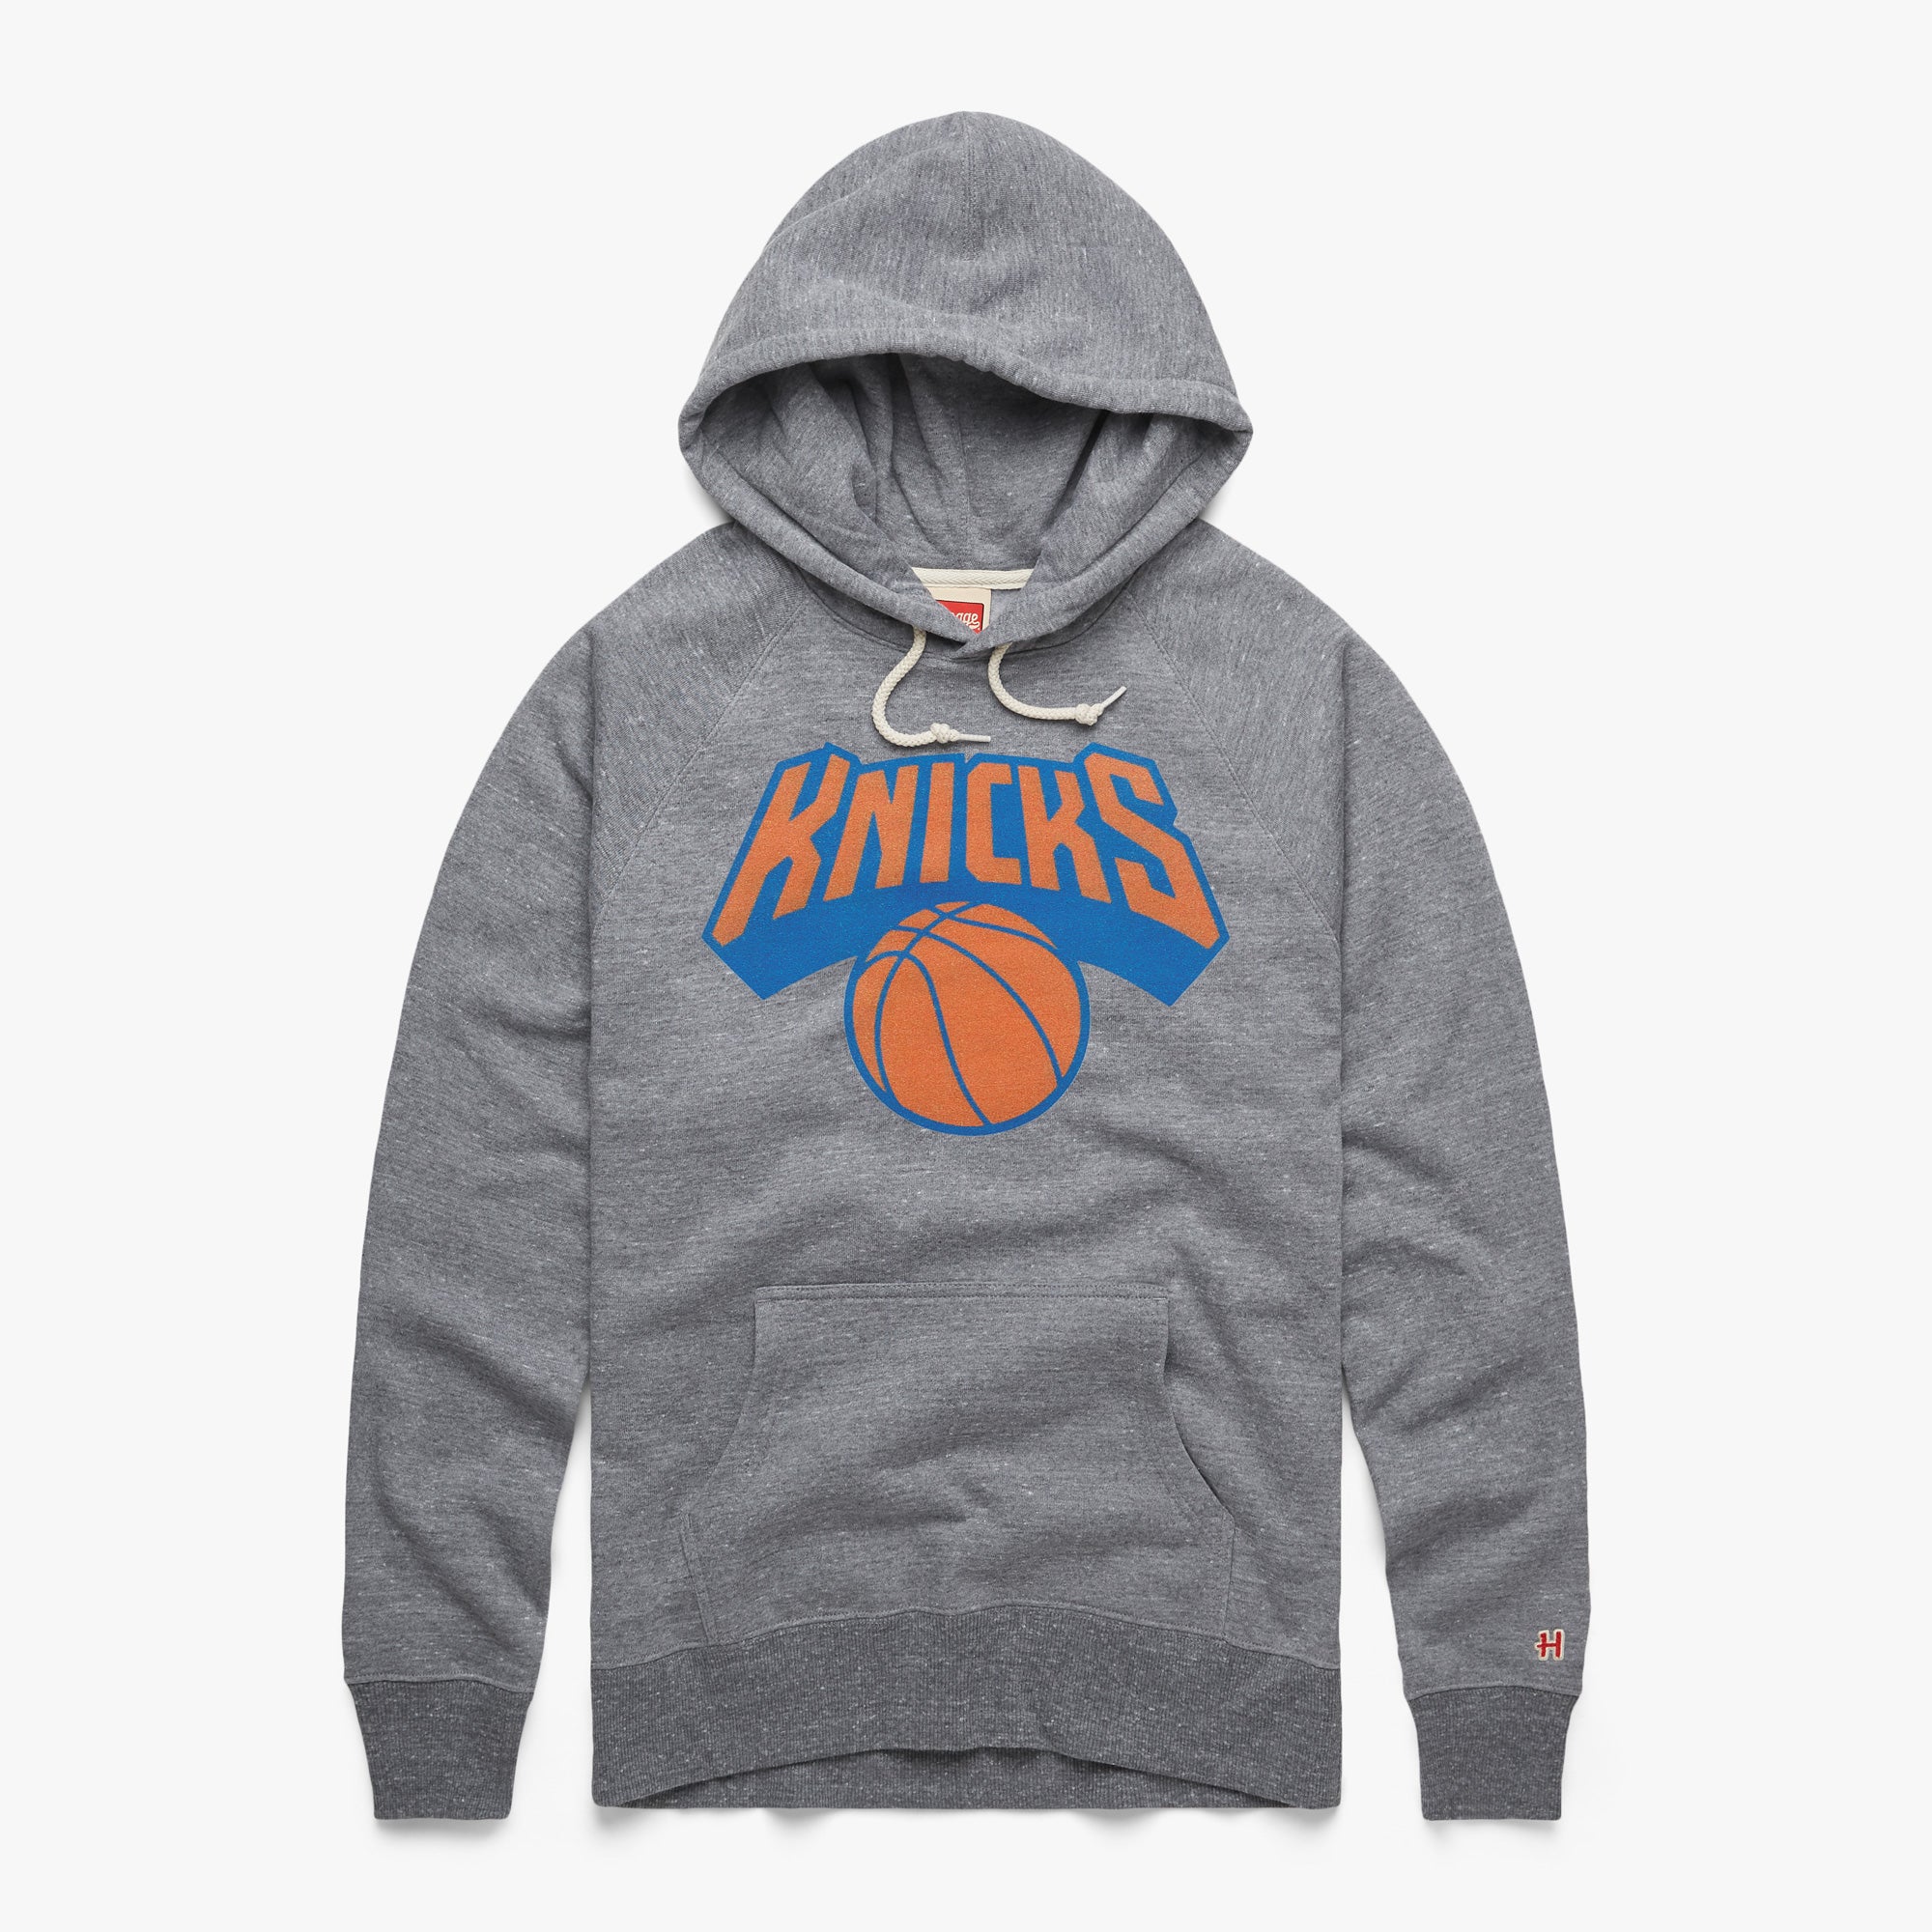 Pro Standard New York Knicks Warm Up T-Shirt - Blue Small, Men's